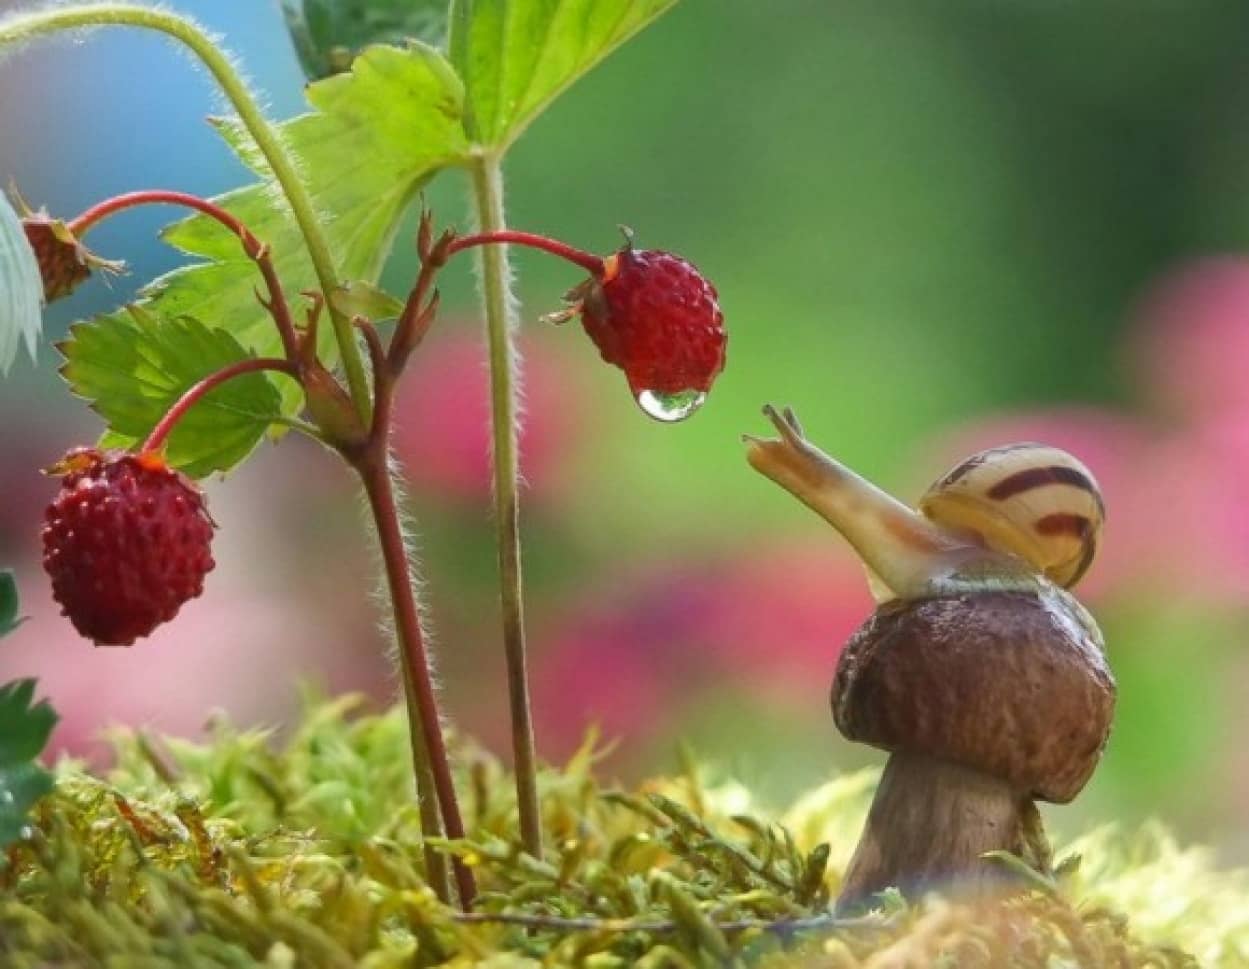 Cute Snail Image